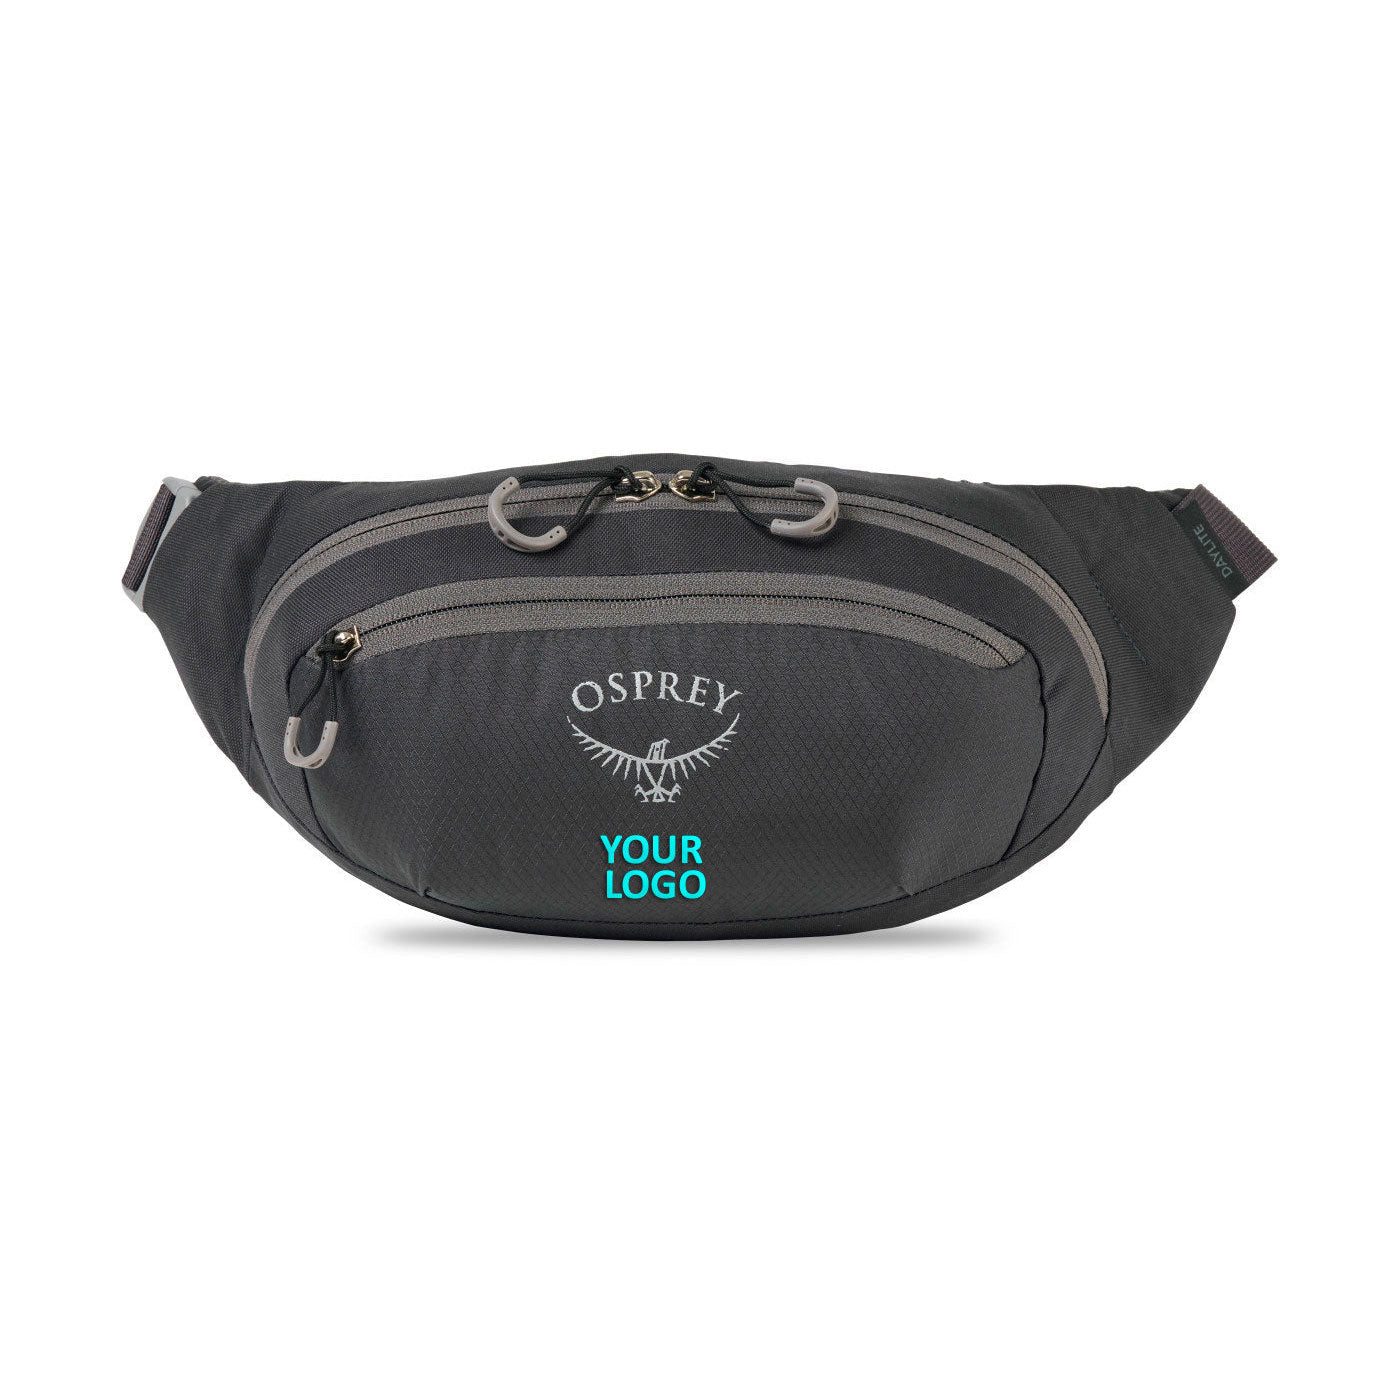 Osprey 101048-001 Black